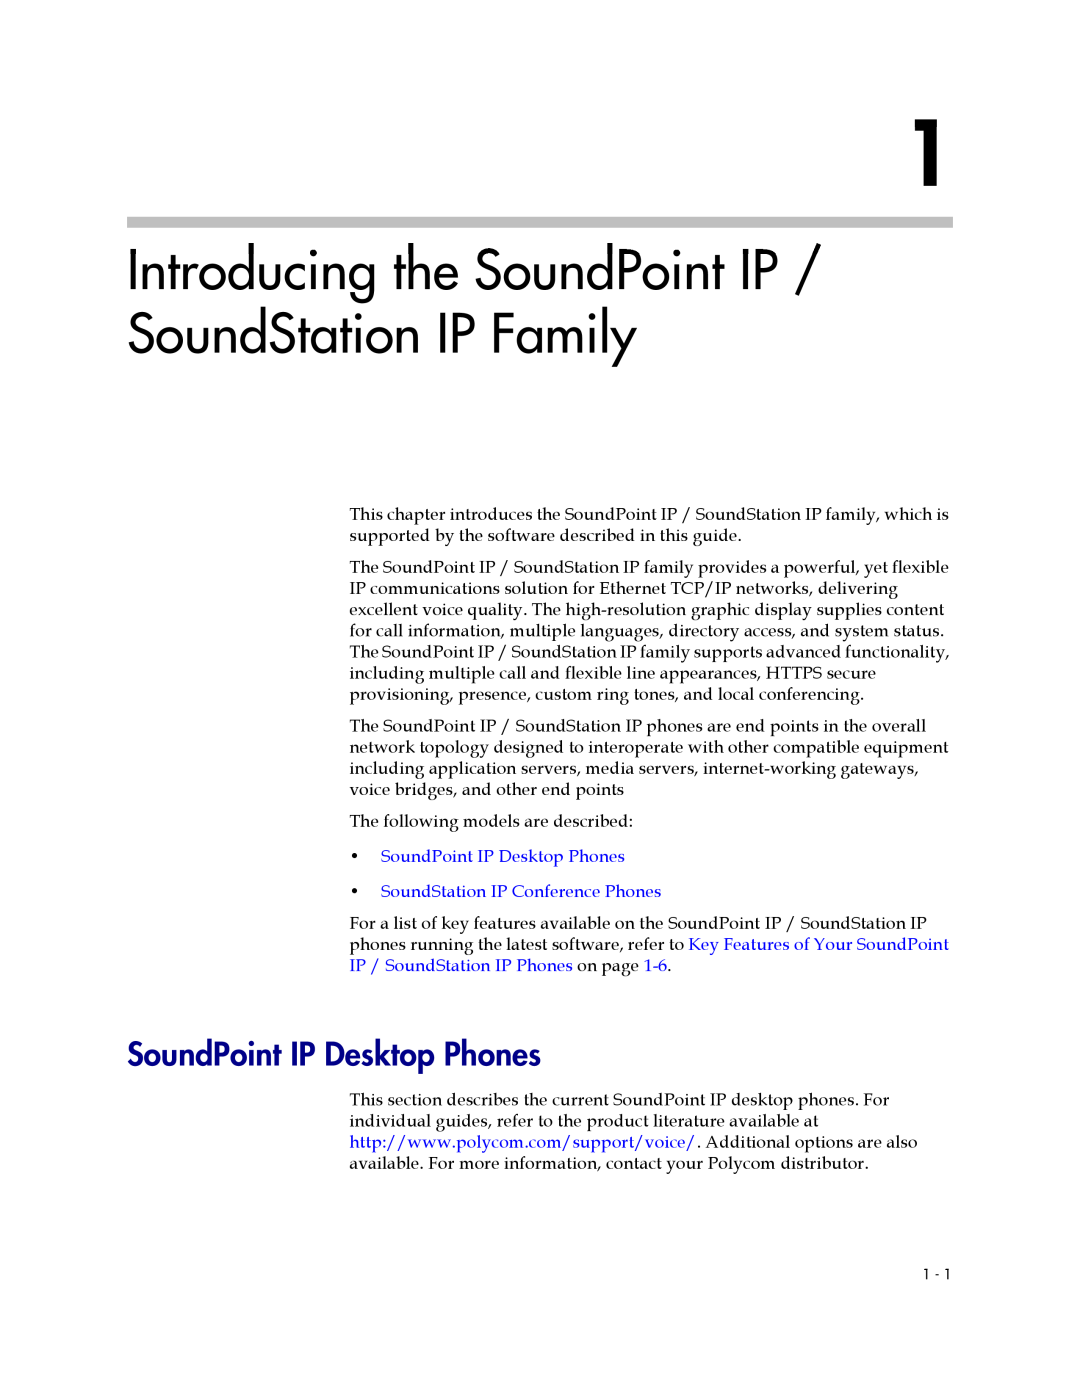 Polycom SIP 3.1 manual Introducing the SoundPoint IP / SoundStation IP Family, SoundPoint IP Desktop Phones 